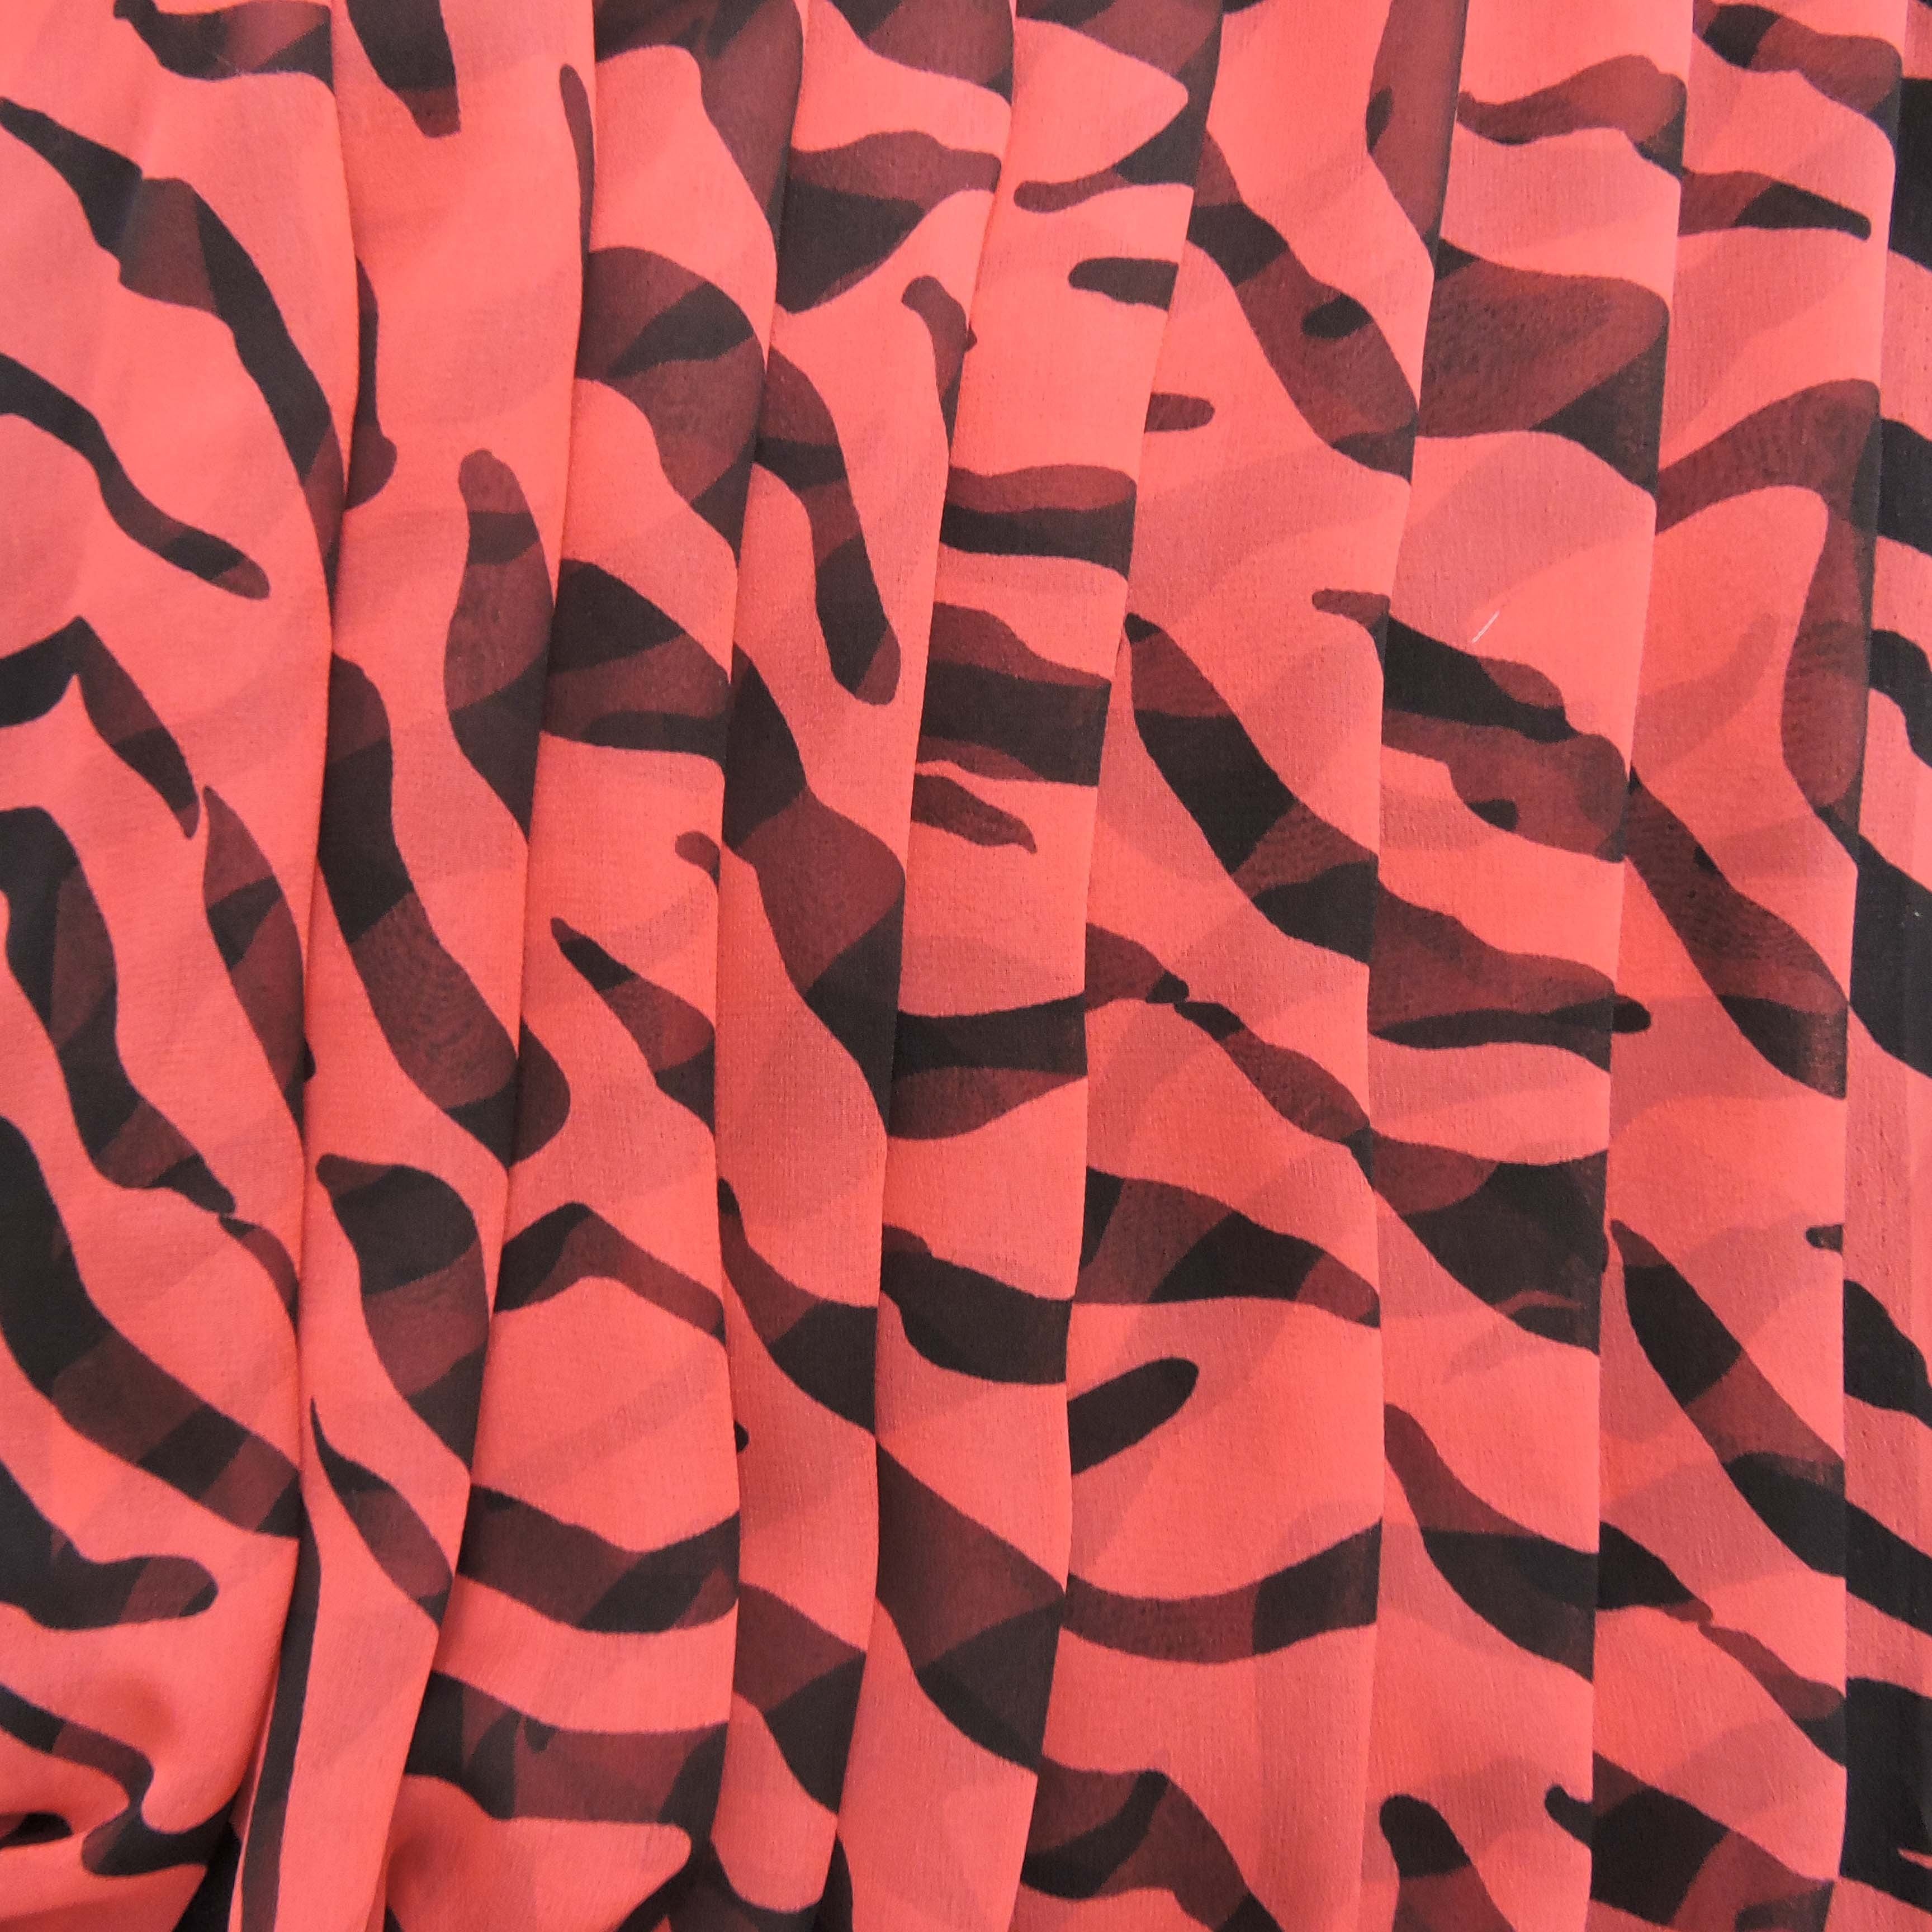 Zebra Printed Silk Chiffon - Pink/Black